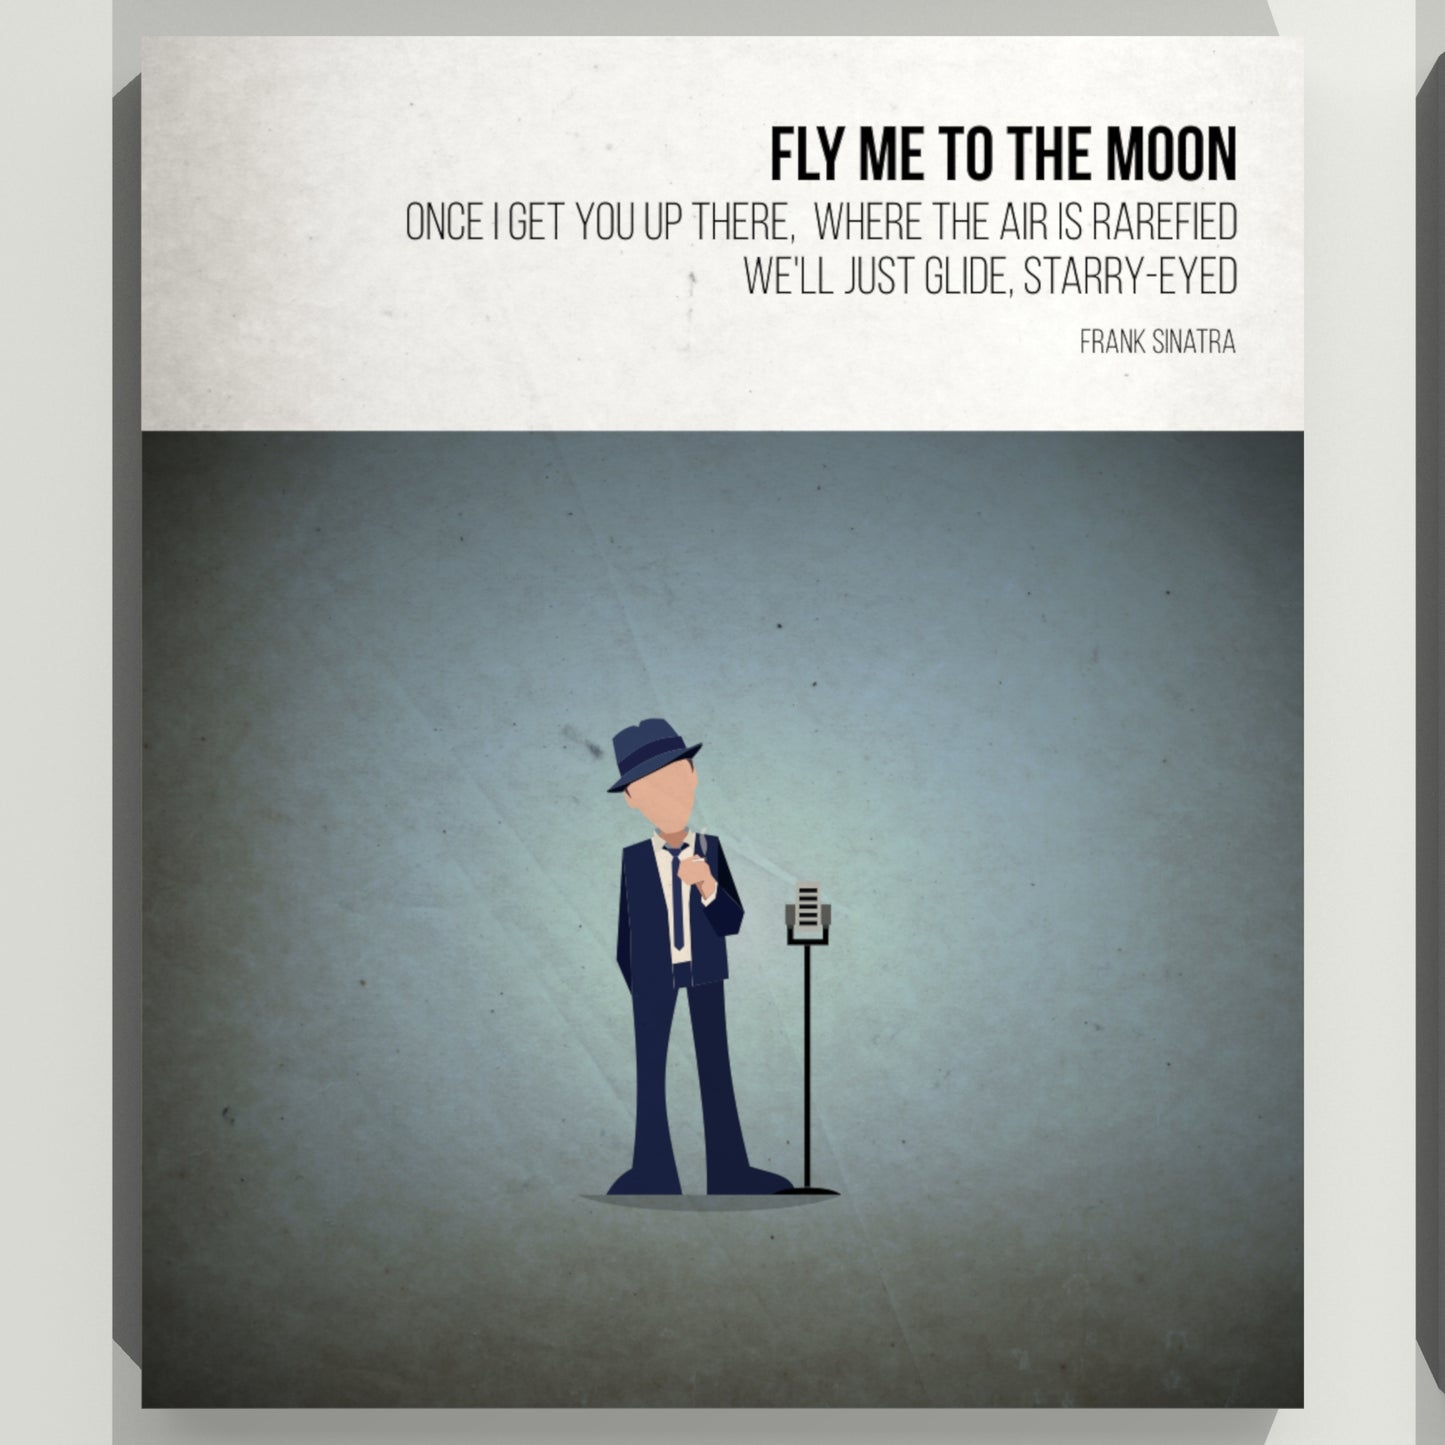 Fly me to the moon - Frank Sinatra - Beatone Canvas Print 2020